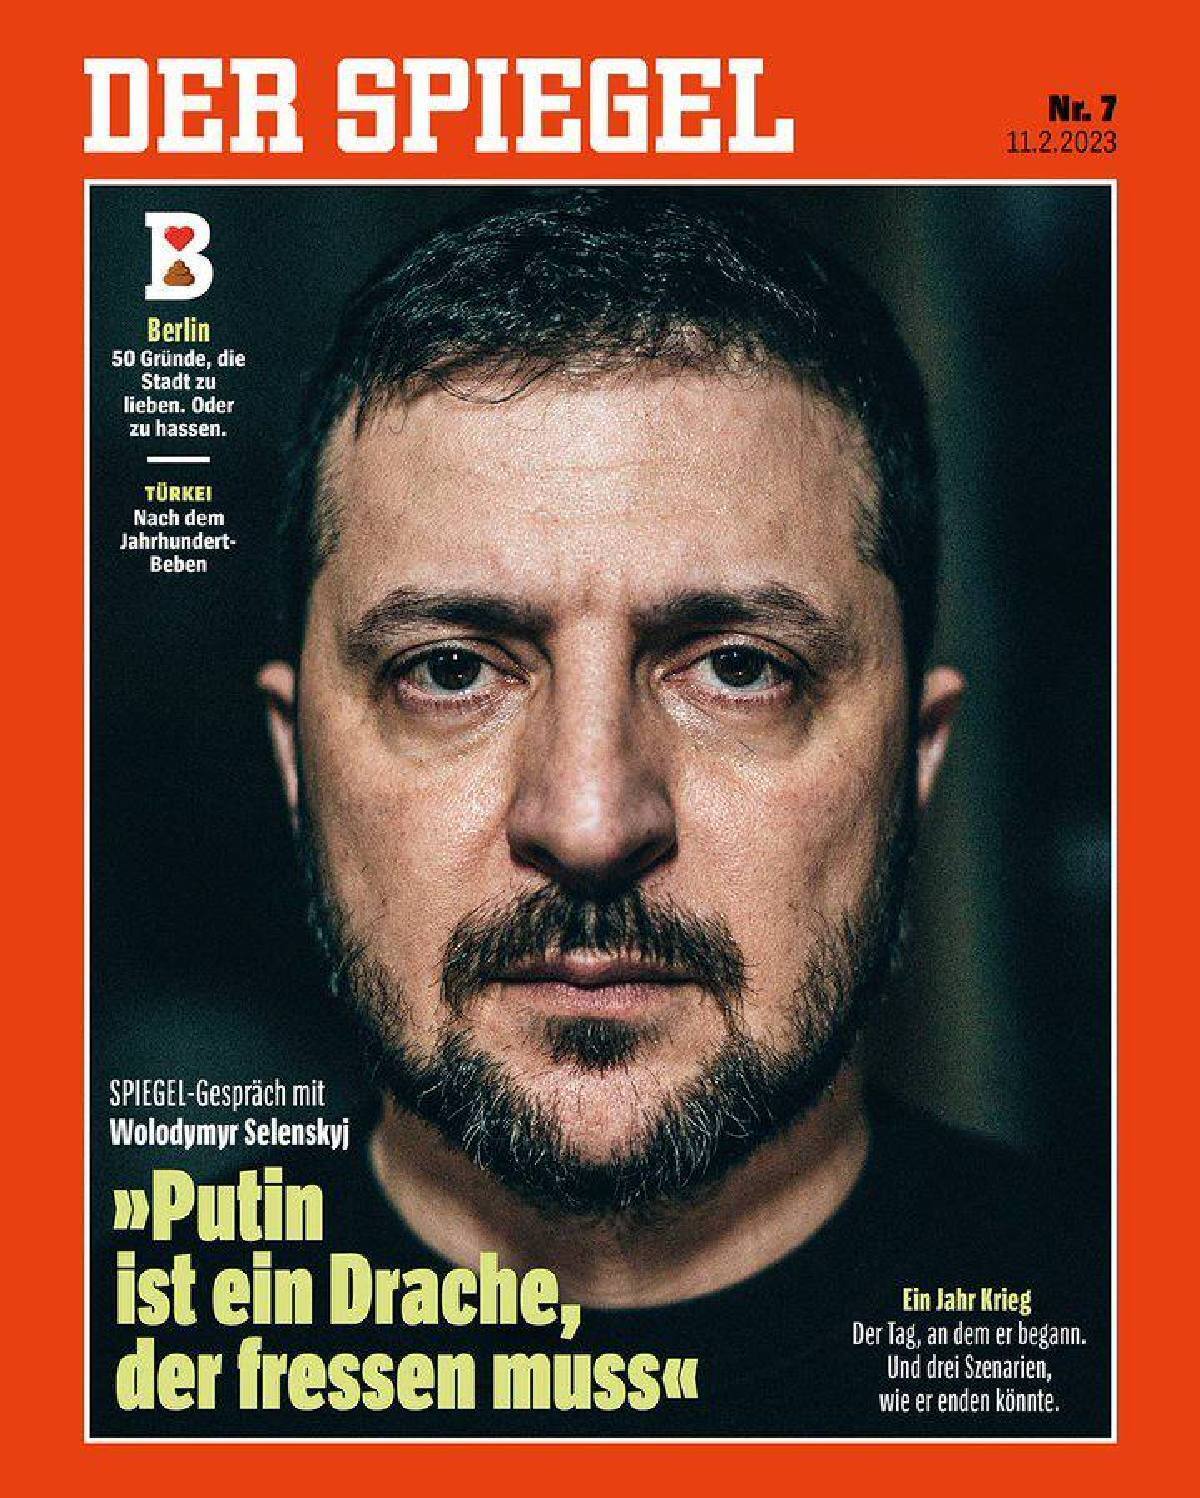 Президент України Володимир Зеленський на обкладинці Der Spiegel